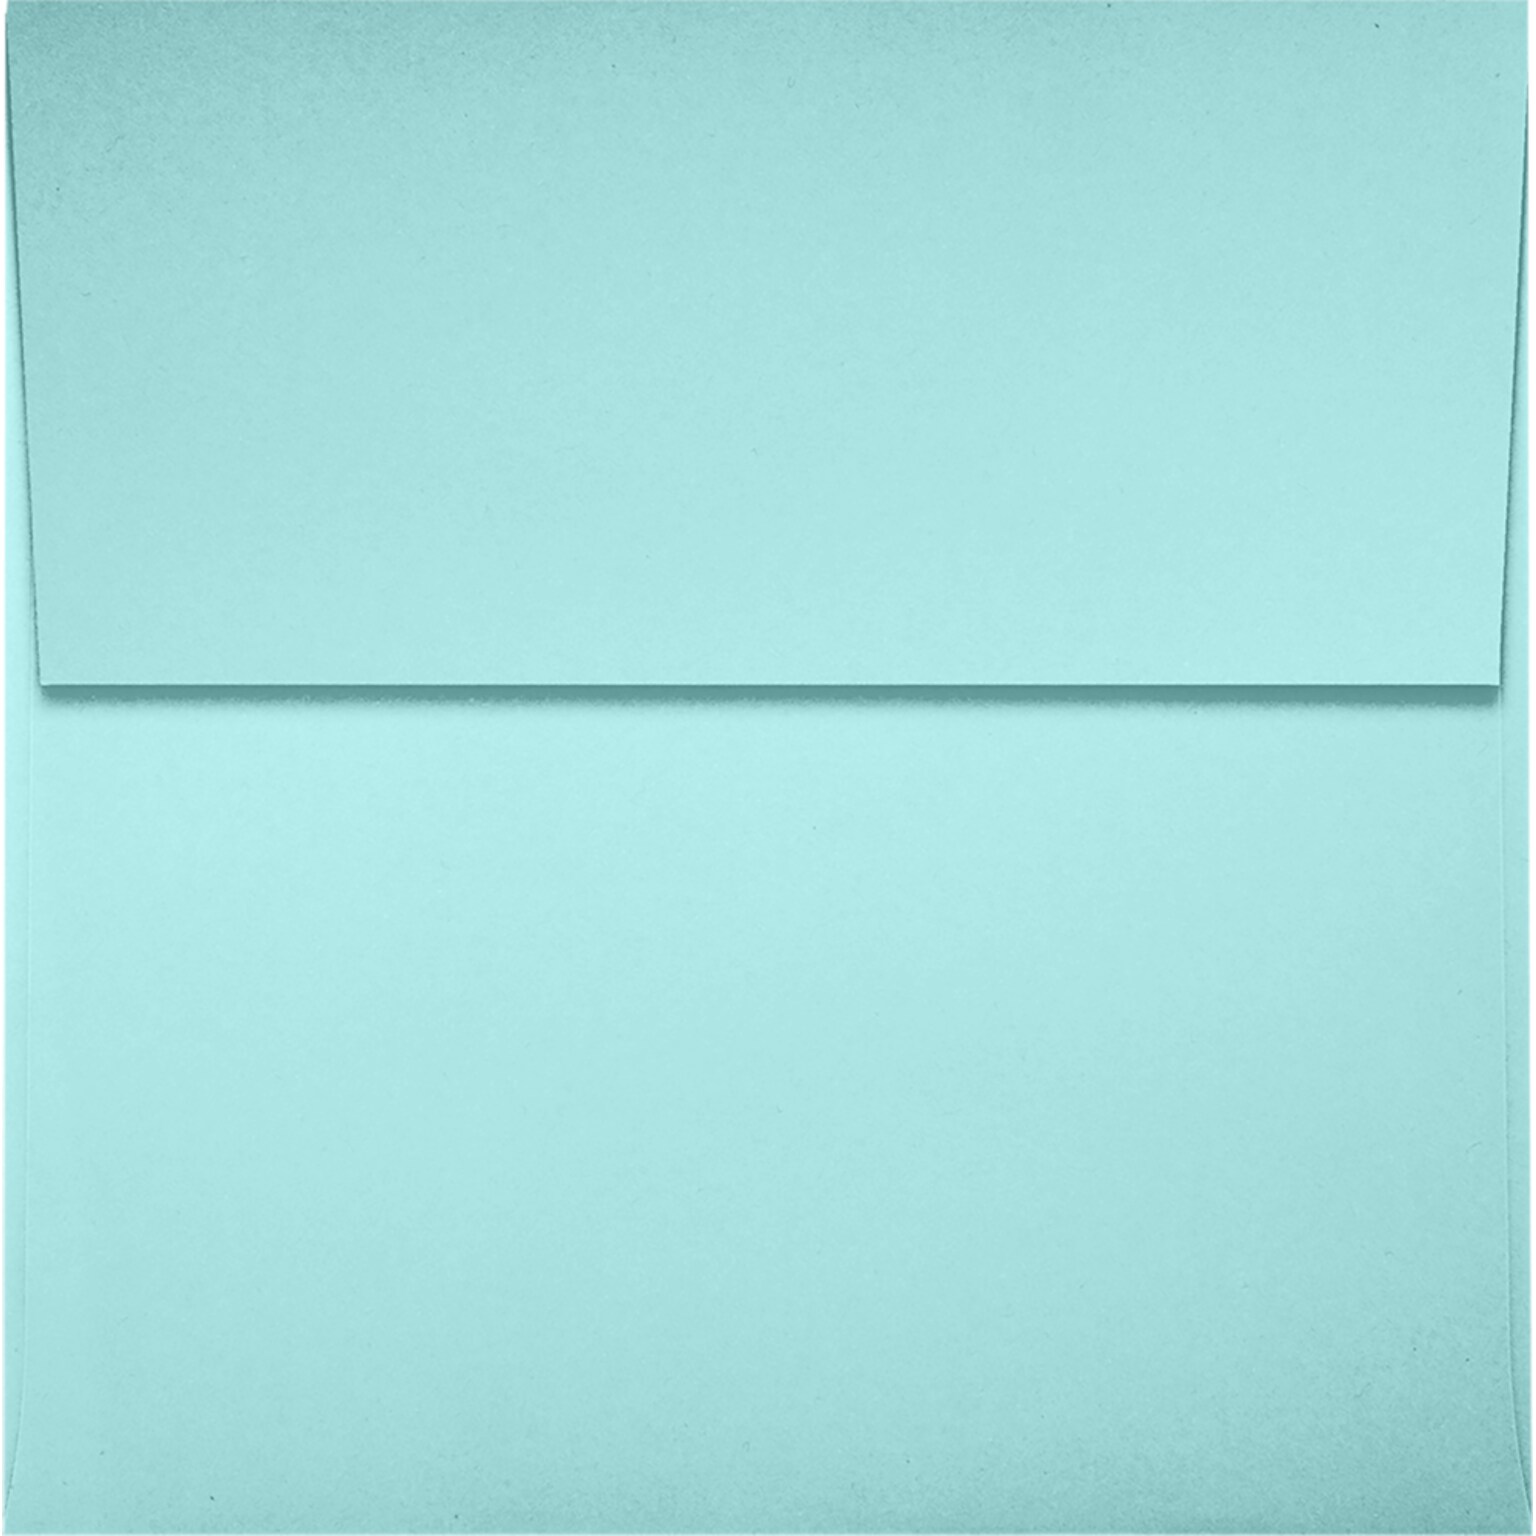 JAM Paper Square Envelopes, Peel & Press, Seafoam, 3 1/4 x 3 1/4, 250 Pack (8503-113-250)